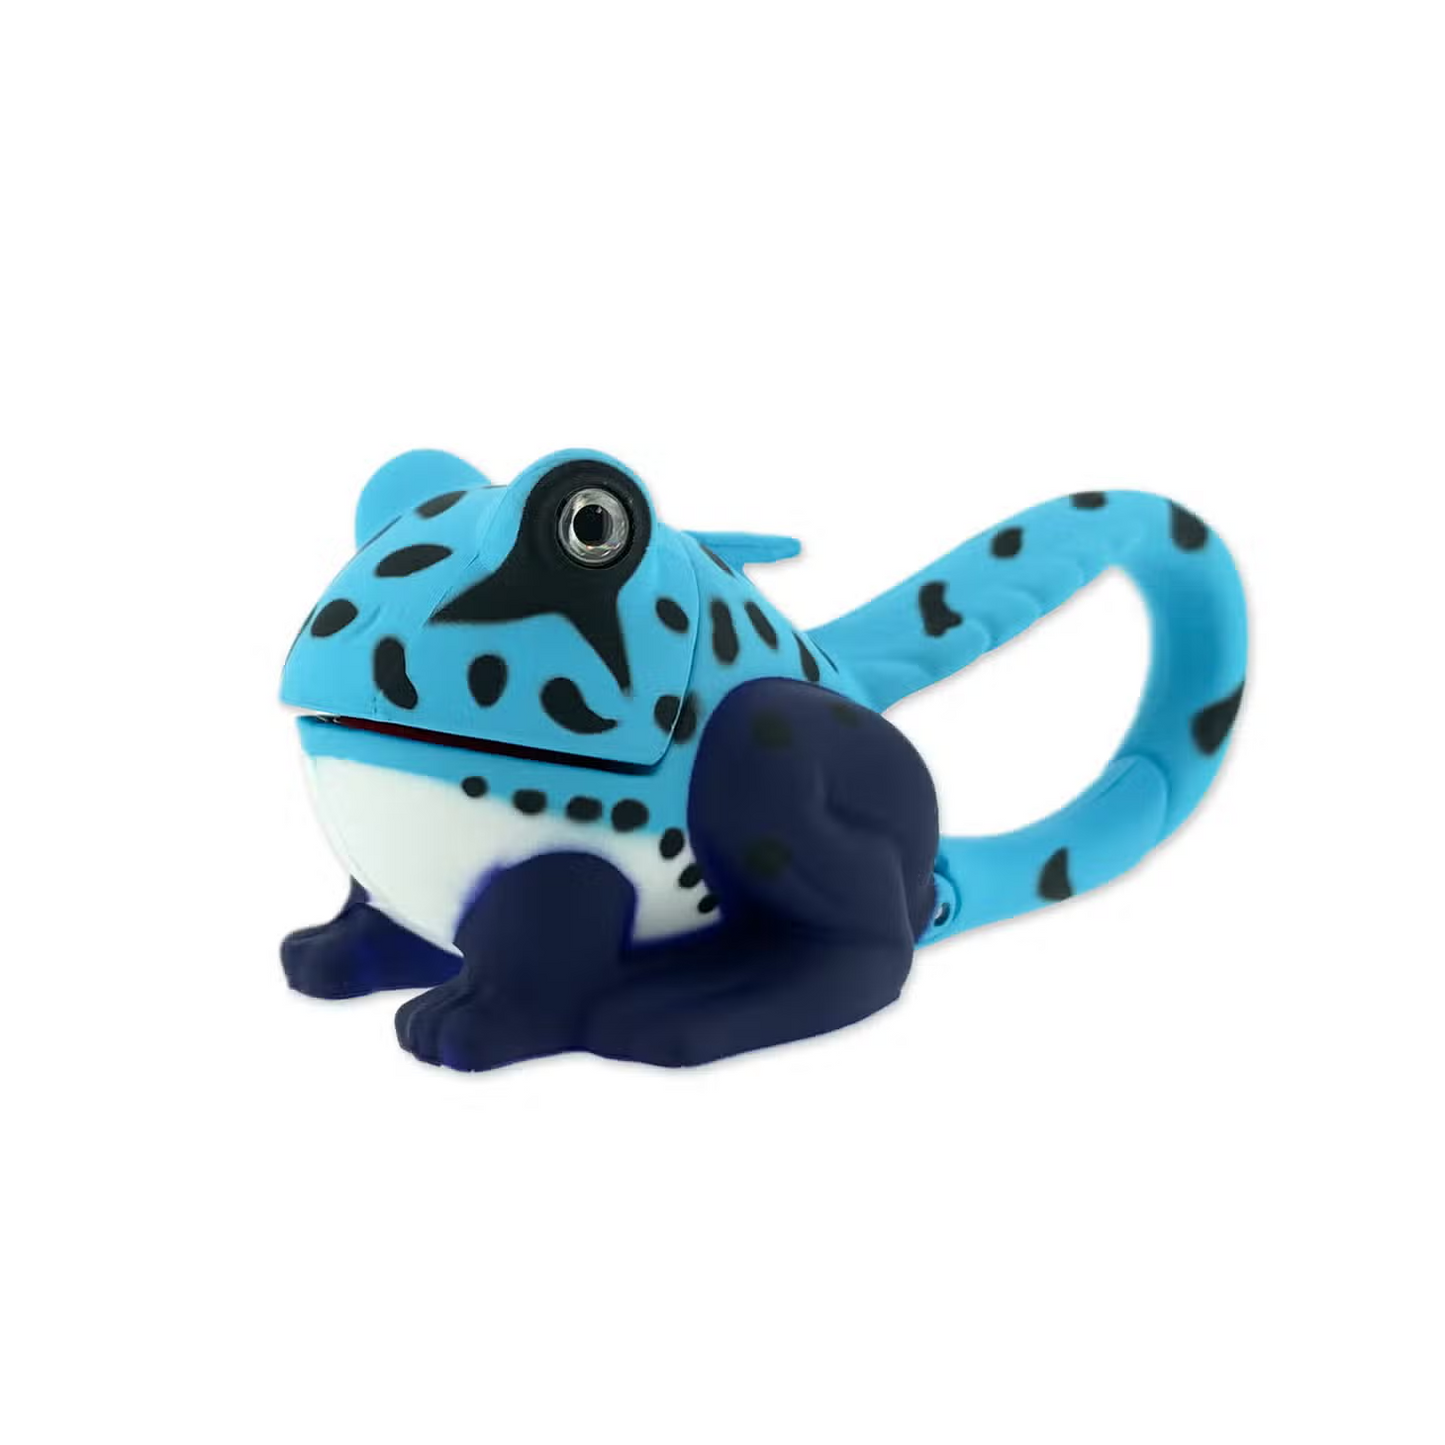 Lifelight Frog - Blue